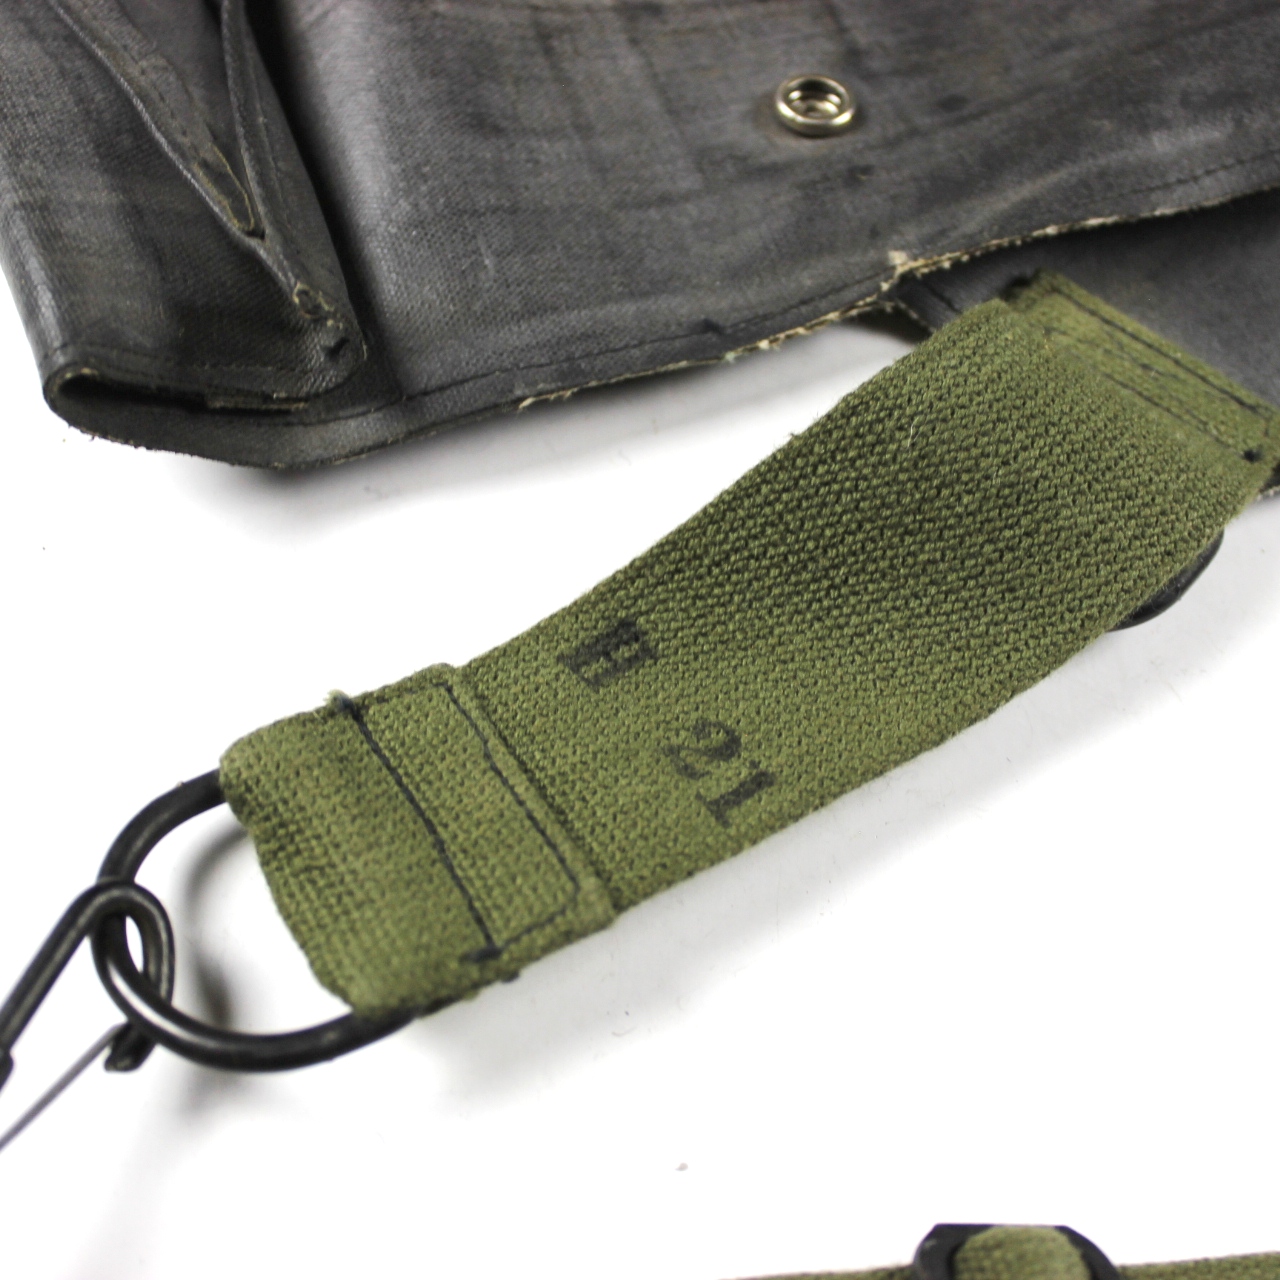 Scarce M7 'D-Day' assault gasmask bag